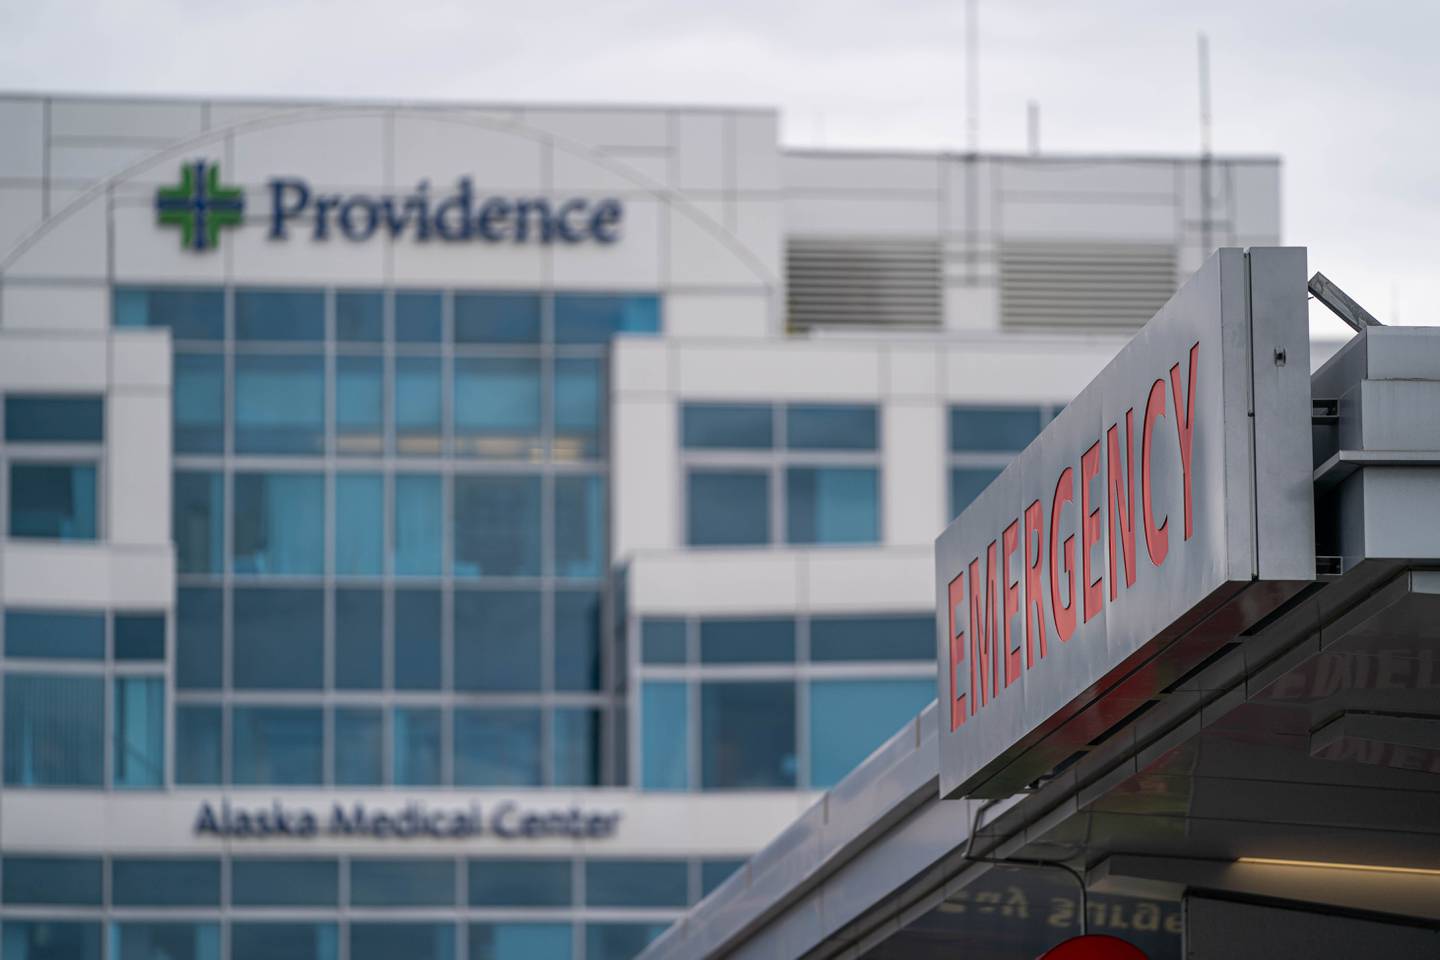 Providence Alaska Medical Center, emergency, emergency department, emergency room, er, hospital, providence, providence hospital